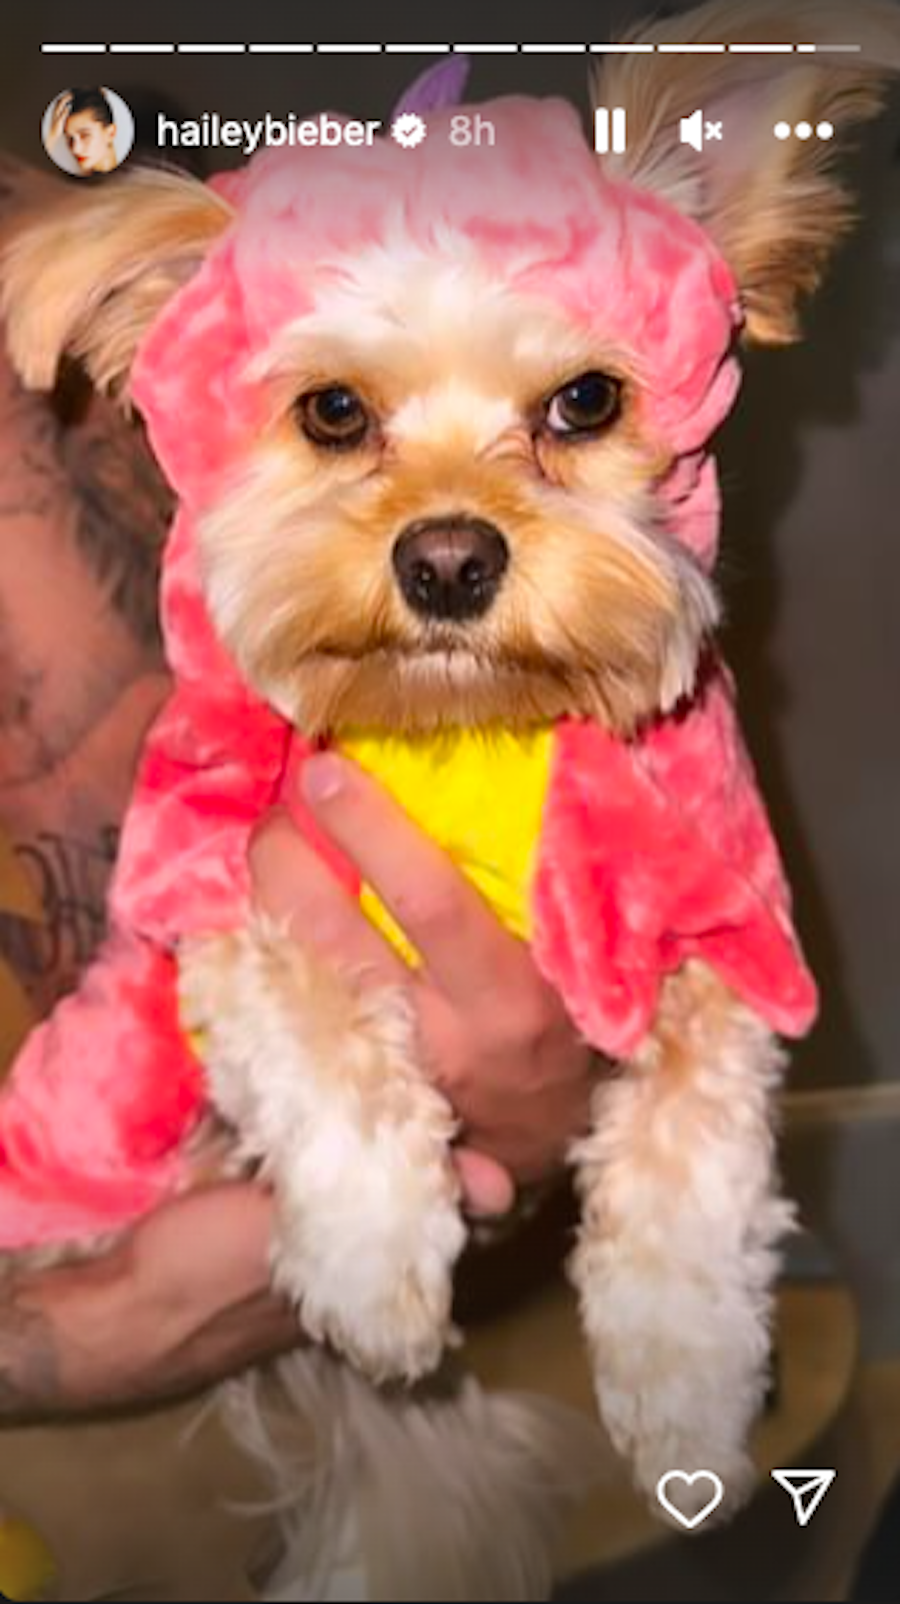 a dog wearing a pink shirt